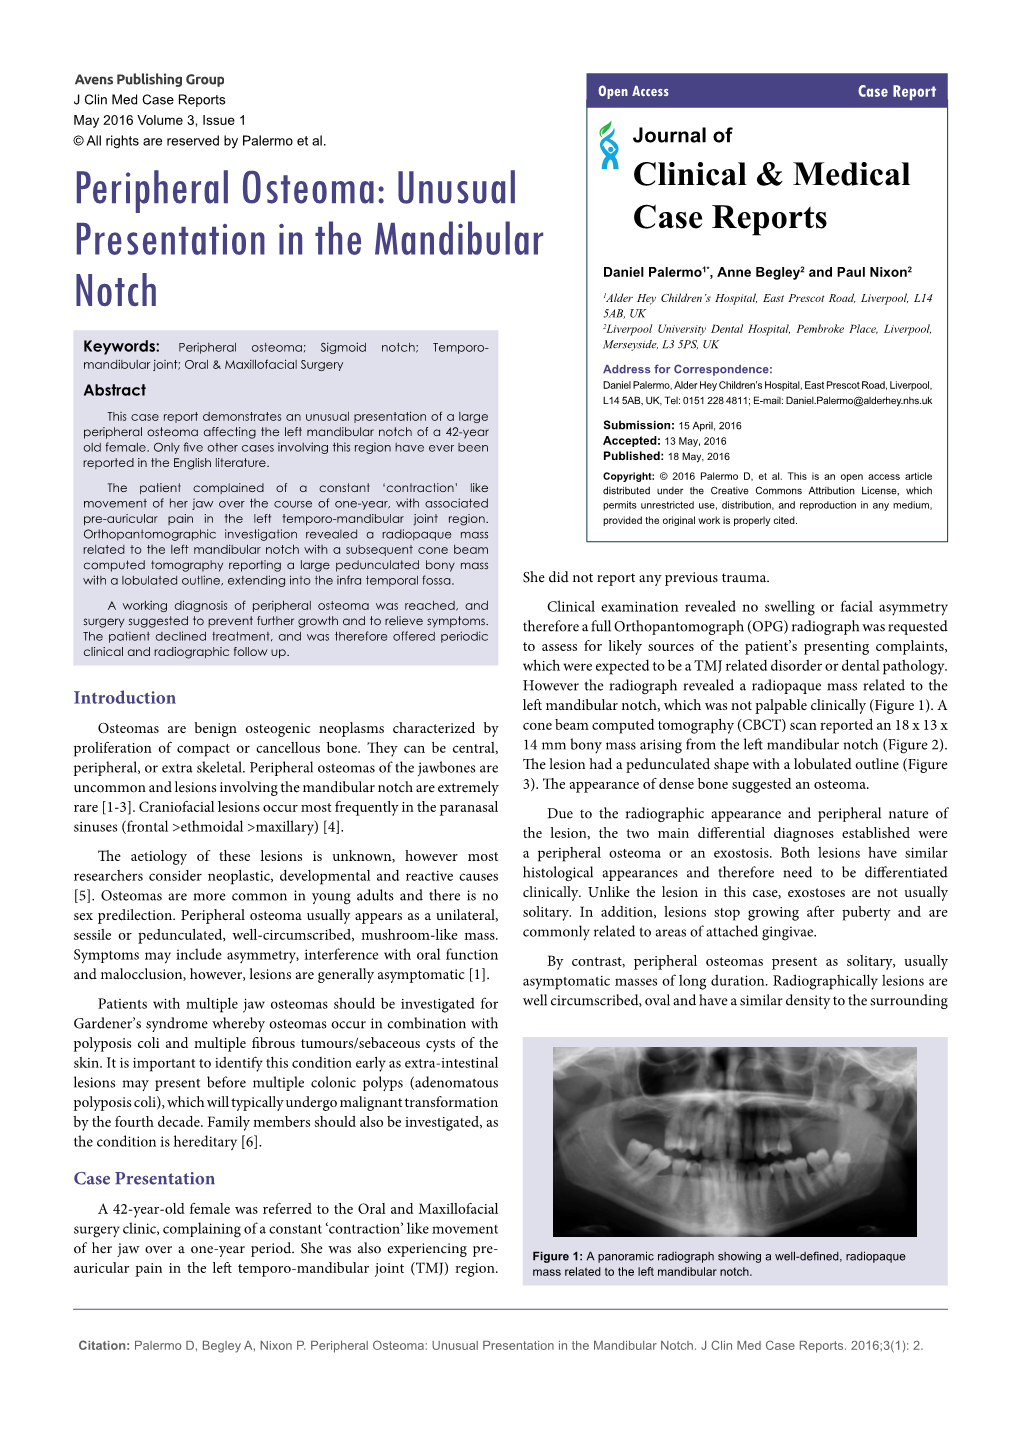 Peripheral Osteoma: Unusual Presentation in the Mandibular Notch